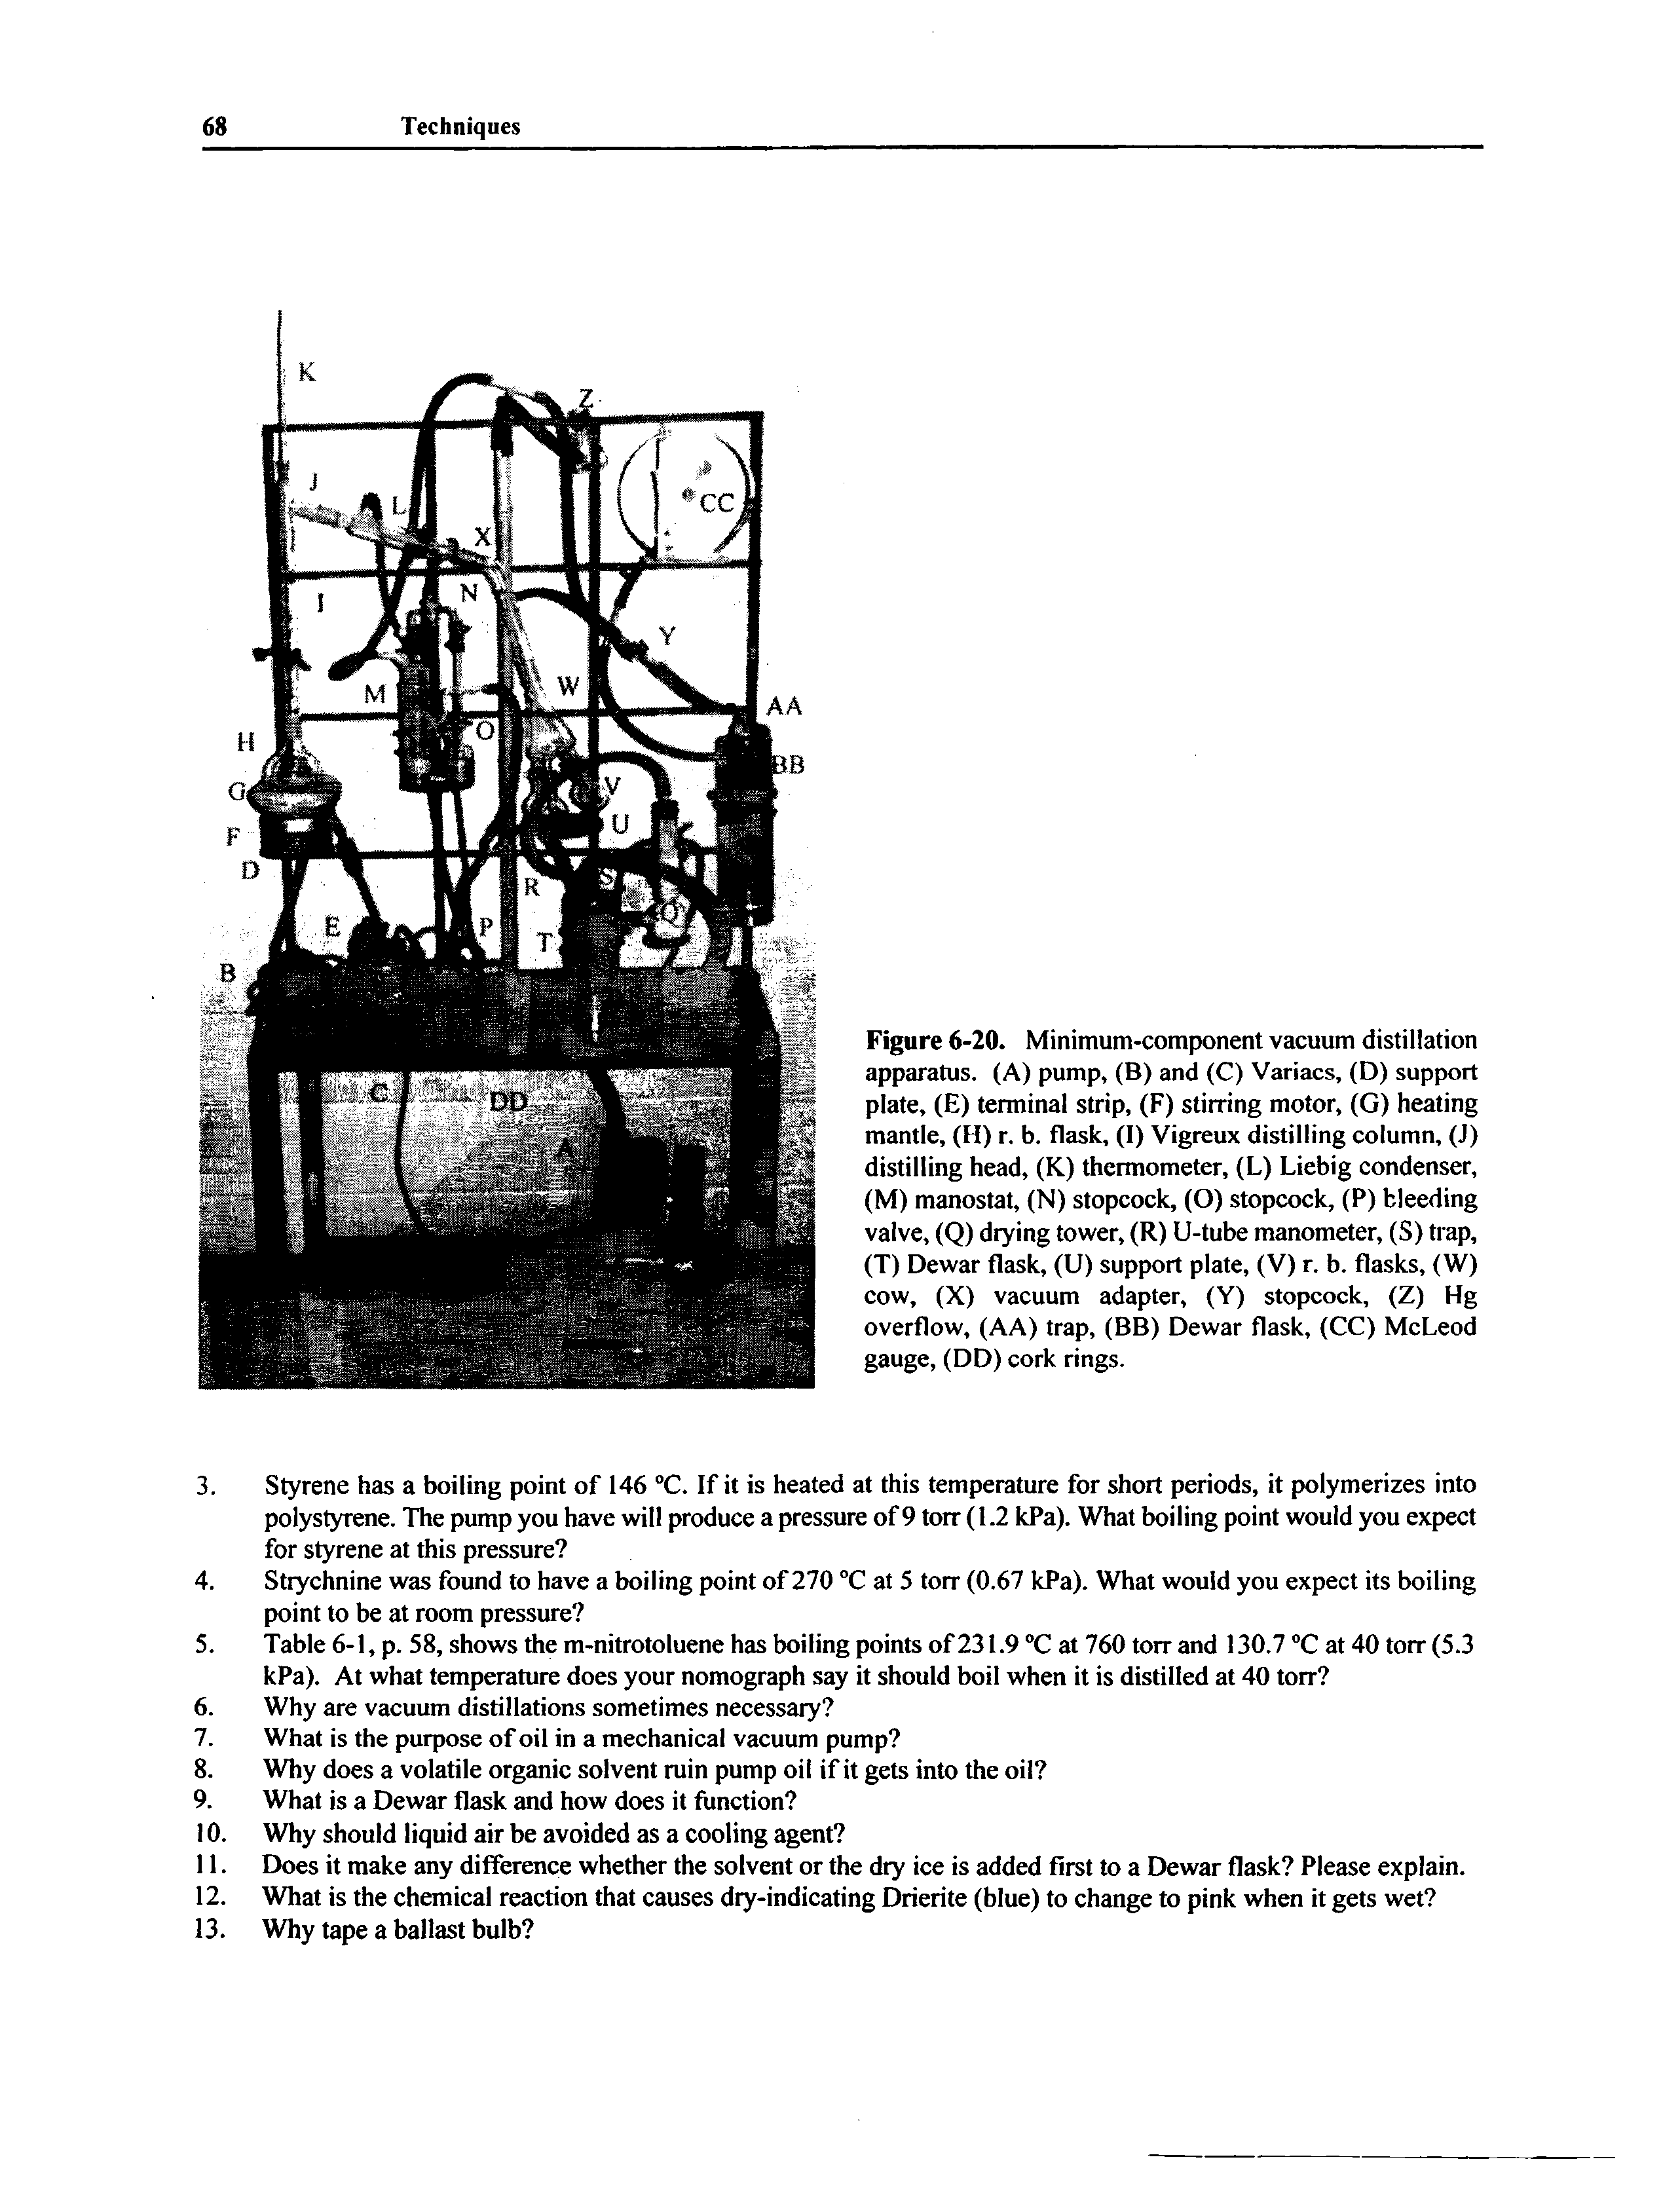 Figure 6-20. Minimum-component vacuum distillation apparatus. (A) pump, (B) and (C) Variacs, (D) support plate, (E) terminal strip, (F) stirring motor, (G) heating mantle, (H) r. b. flask, (I) Vigreux distilling column, (J) distilling head, (K) thermometer, (L) Liebig condenser, (M) manostat, (N) stopcock, (O) stopcock, (P) bleeding valve, (Q) drying tower, (R) U-tube manometer, (S) trap, (T) Dewar flask, (U) support plate, (V) r. b. flasks, (W) cow, (X) vacuum adapter, (Y) stopcock, (Z) Hg overflow, (AA) trap, (BB) Dewar flask, (CC) McLeod gauge, (DD) cork rings.